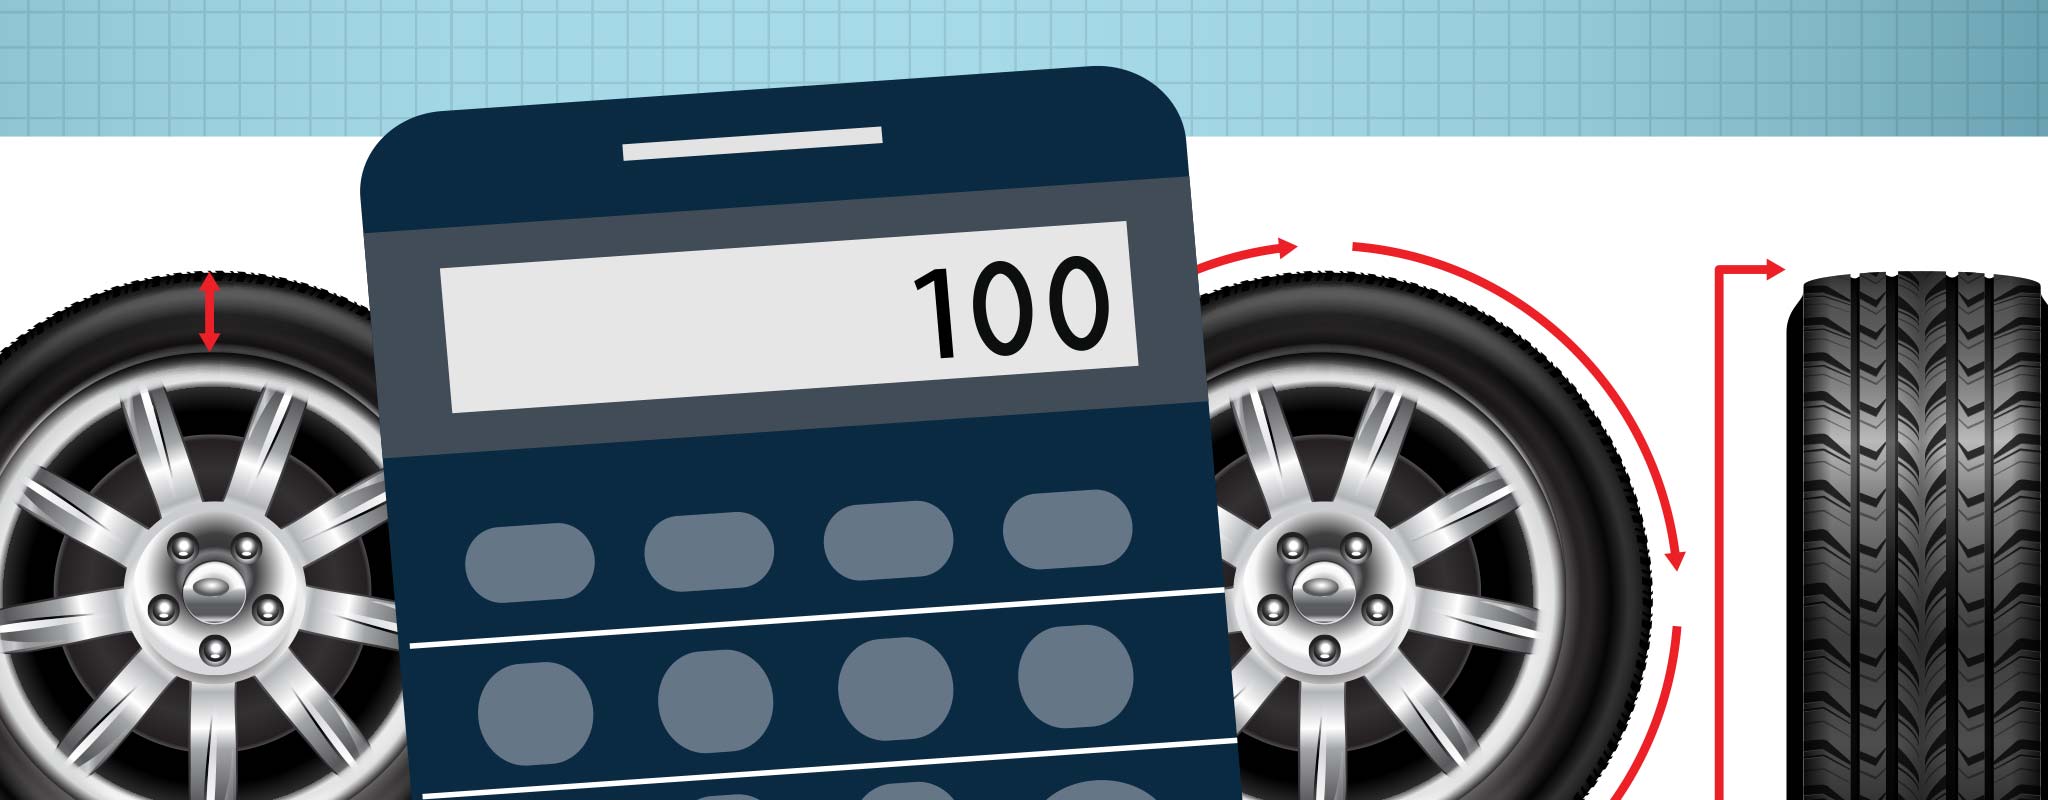 Calculator and tire illustration.